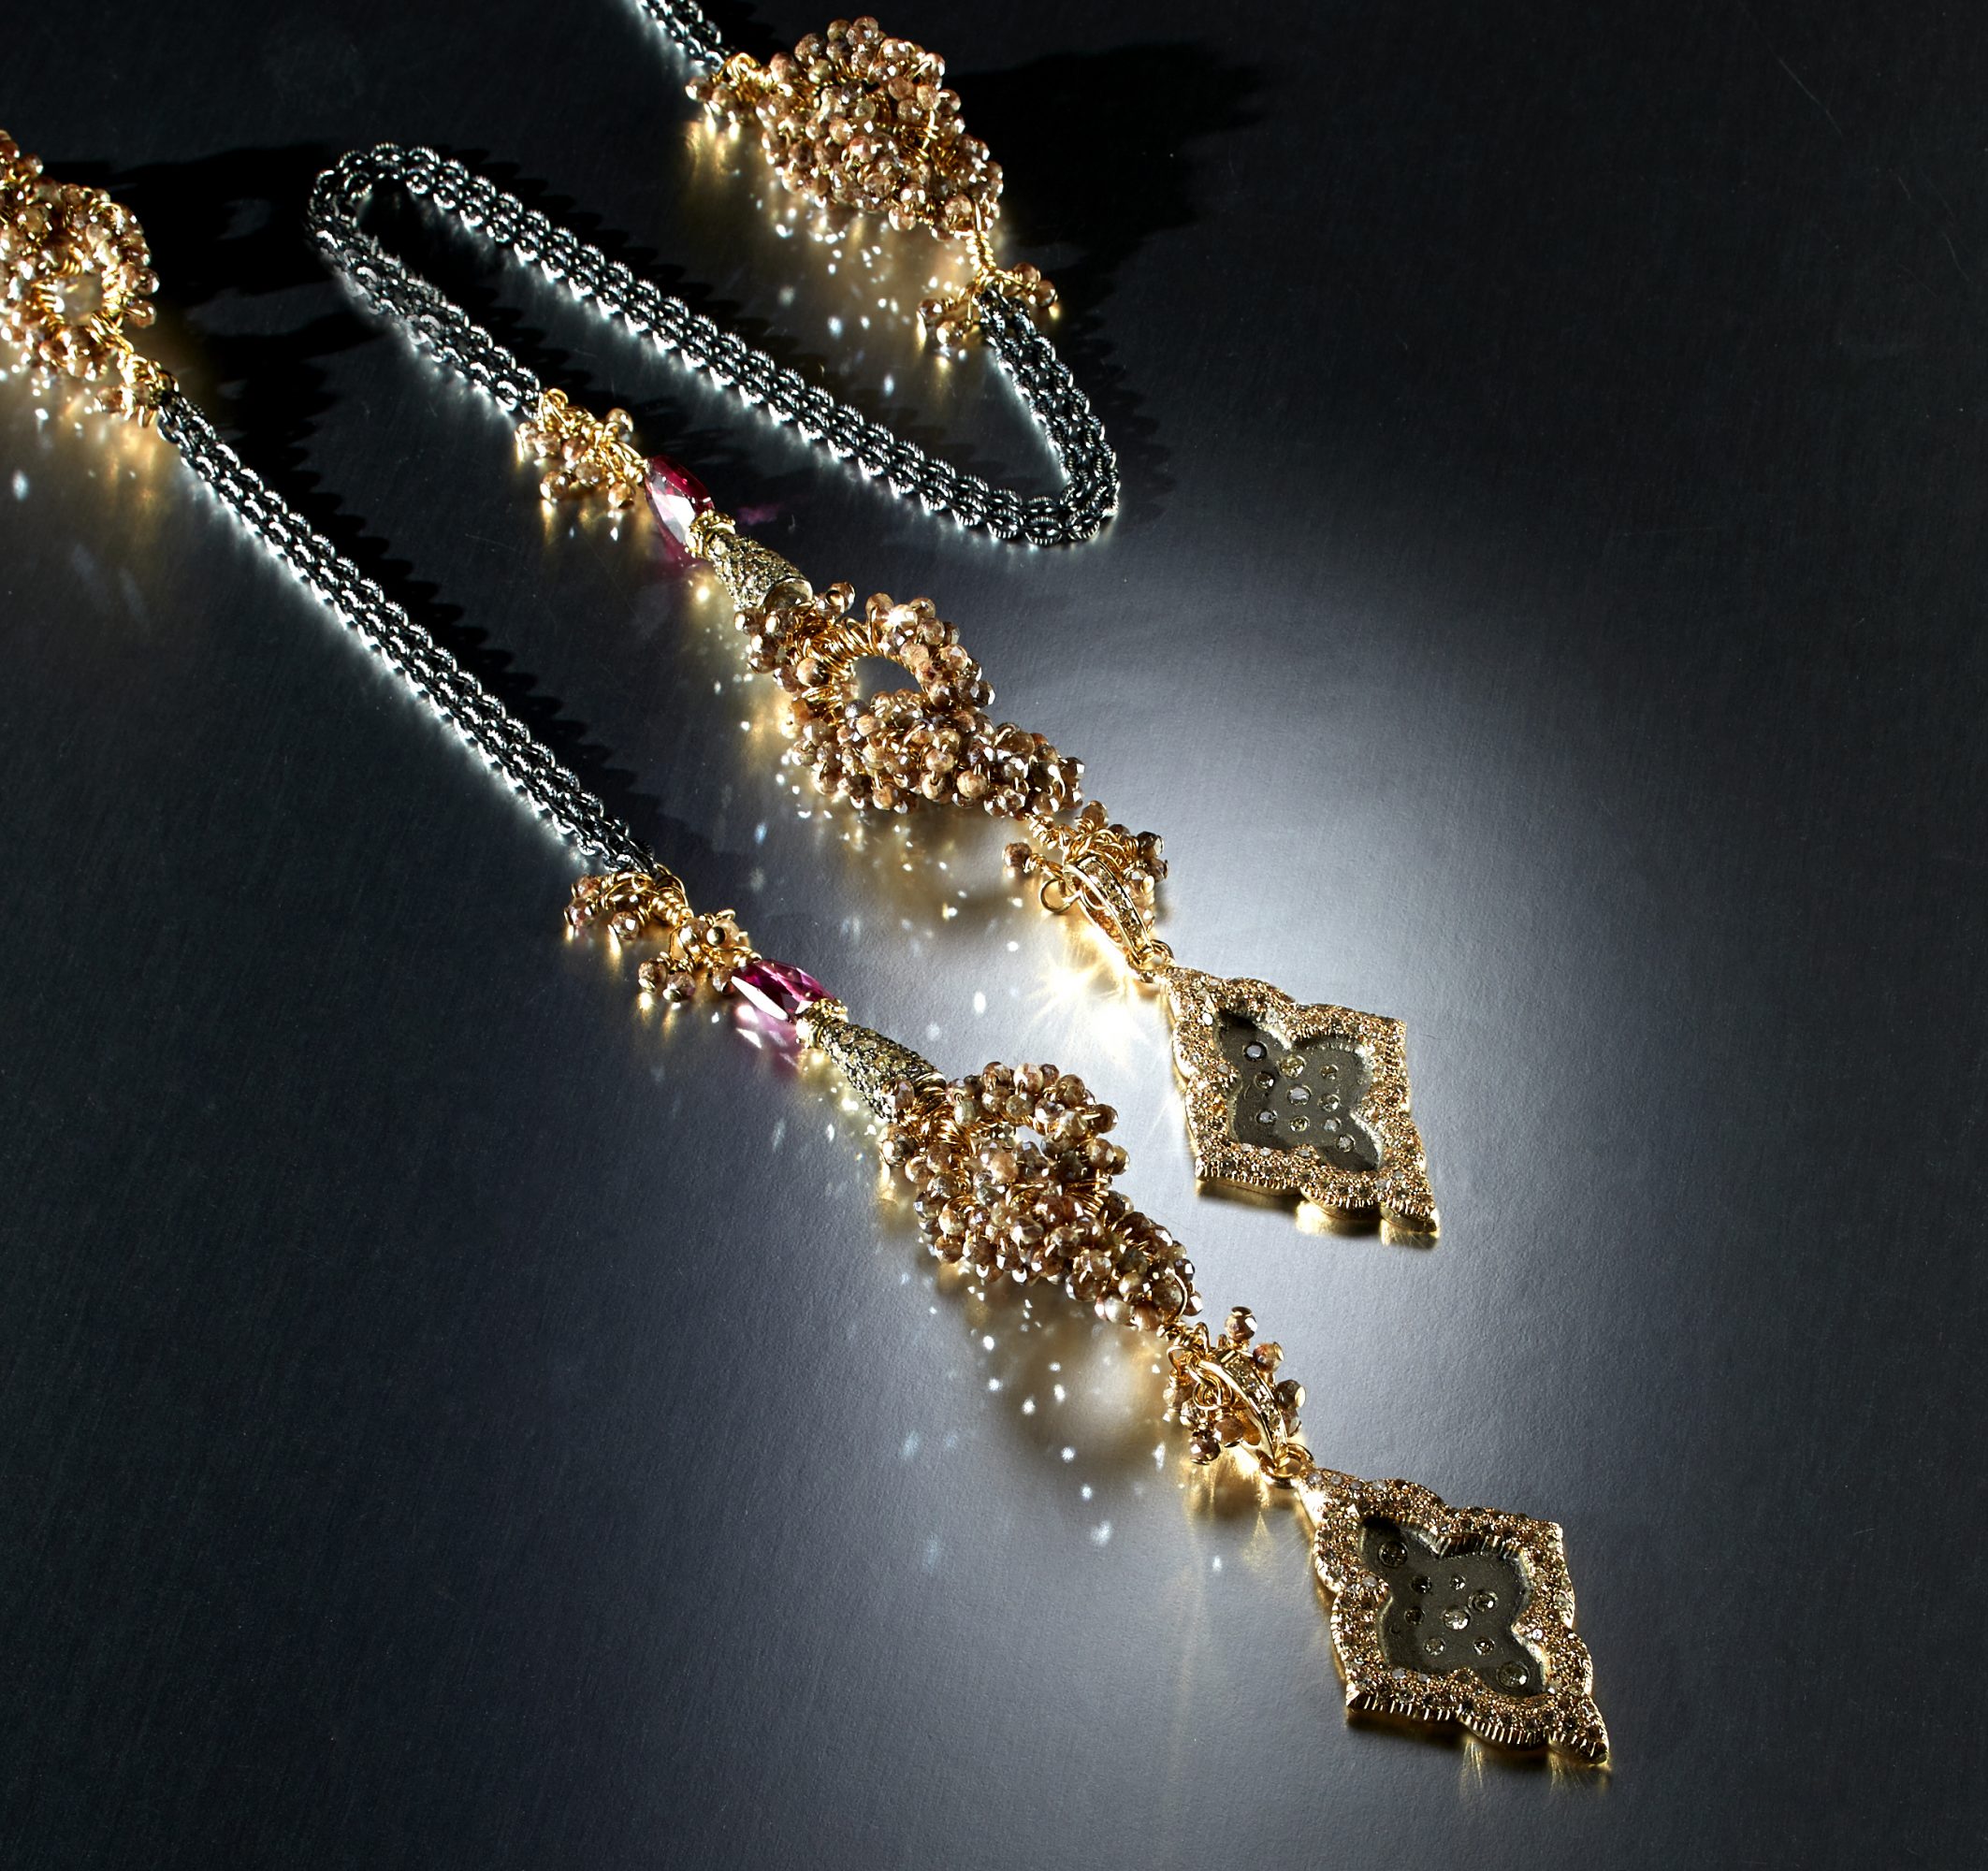 Jewelry by Talia Don Designs - Neiman Marcus, Short Hill NJHere